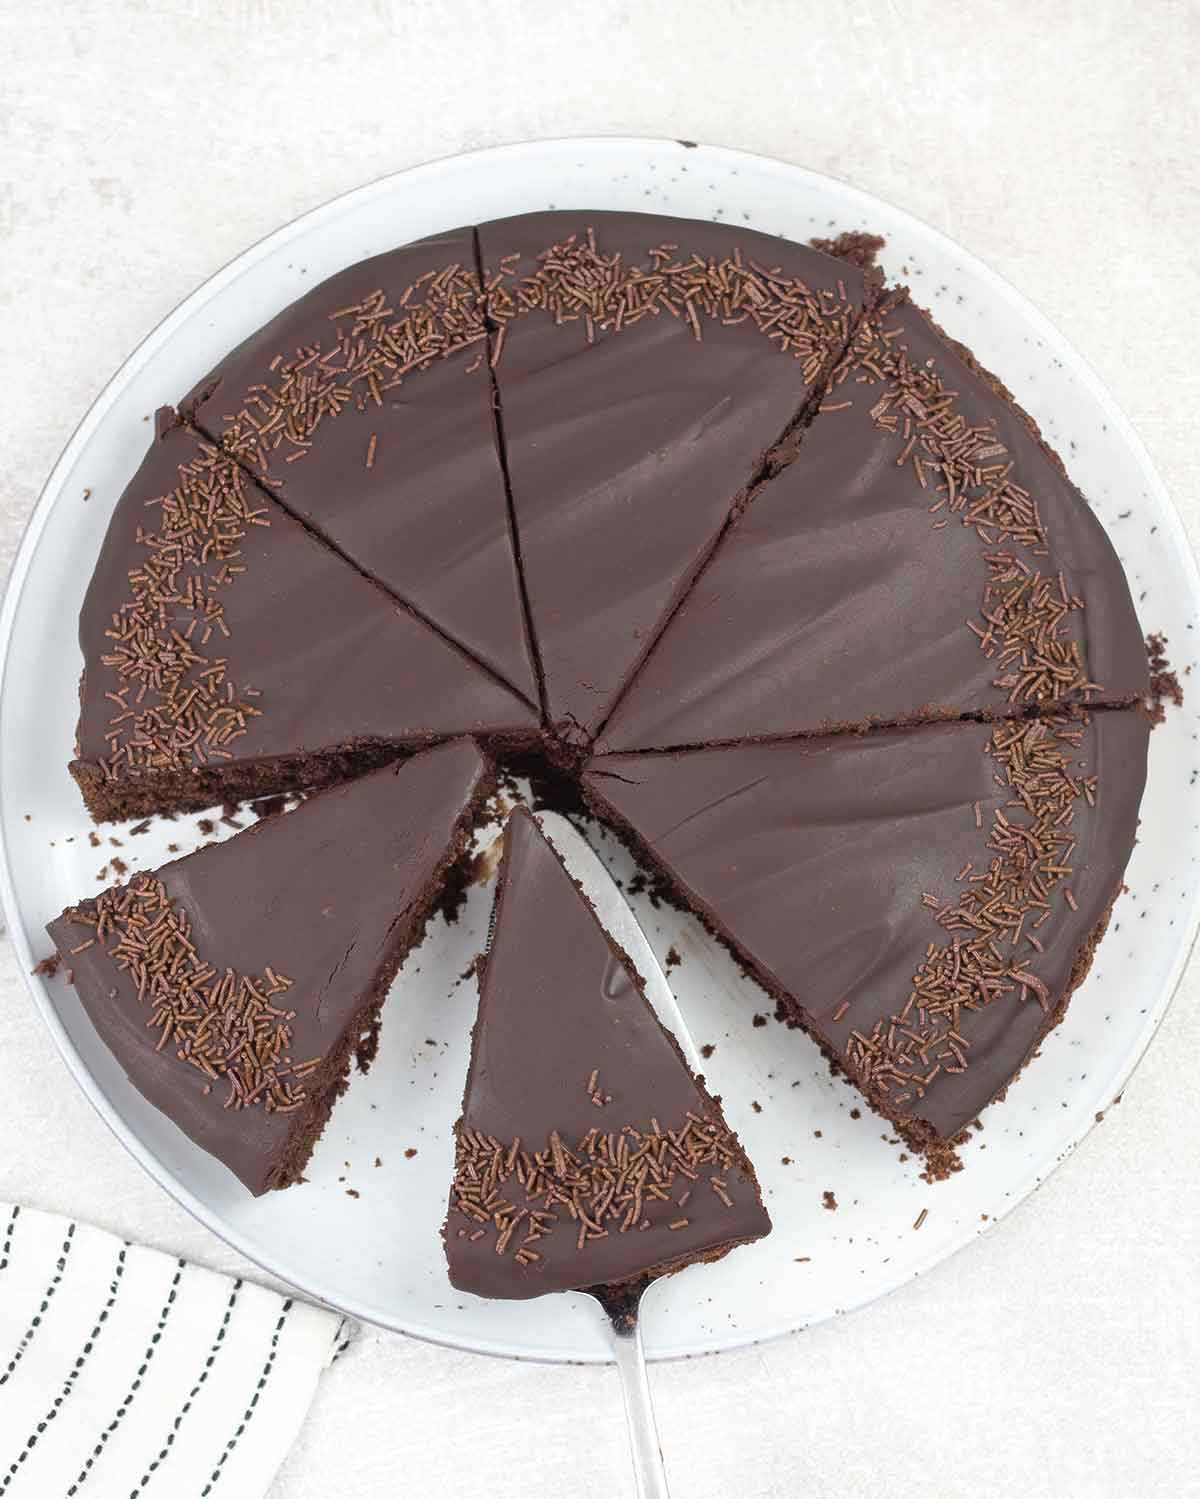 Microwave chocolate cake slice topped with chocolate ganache.